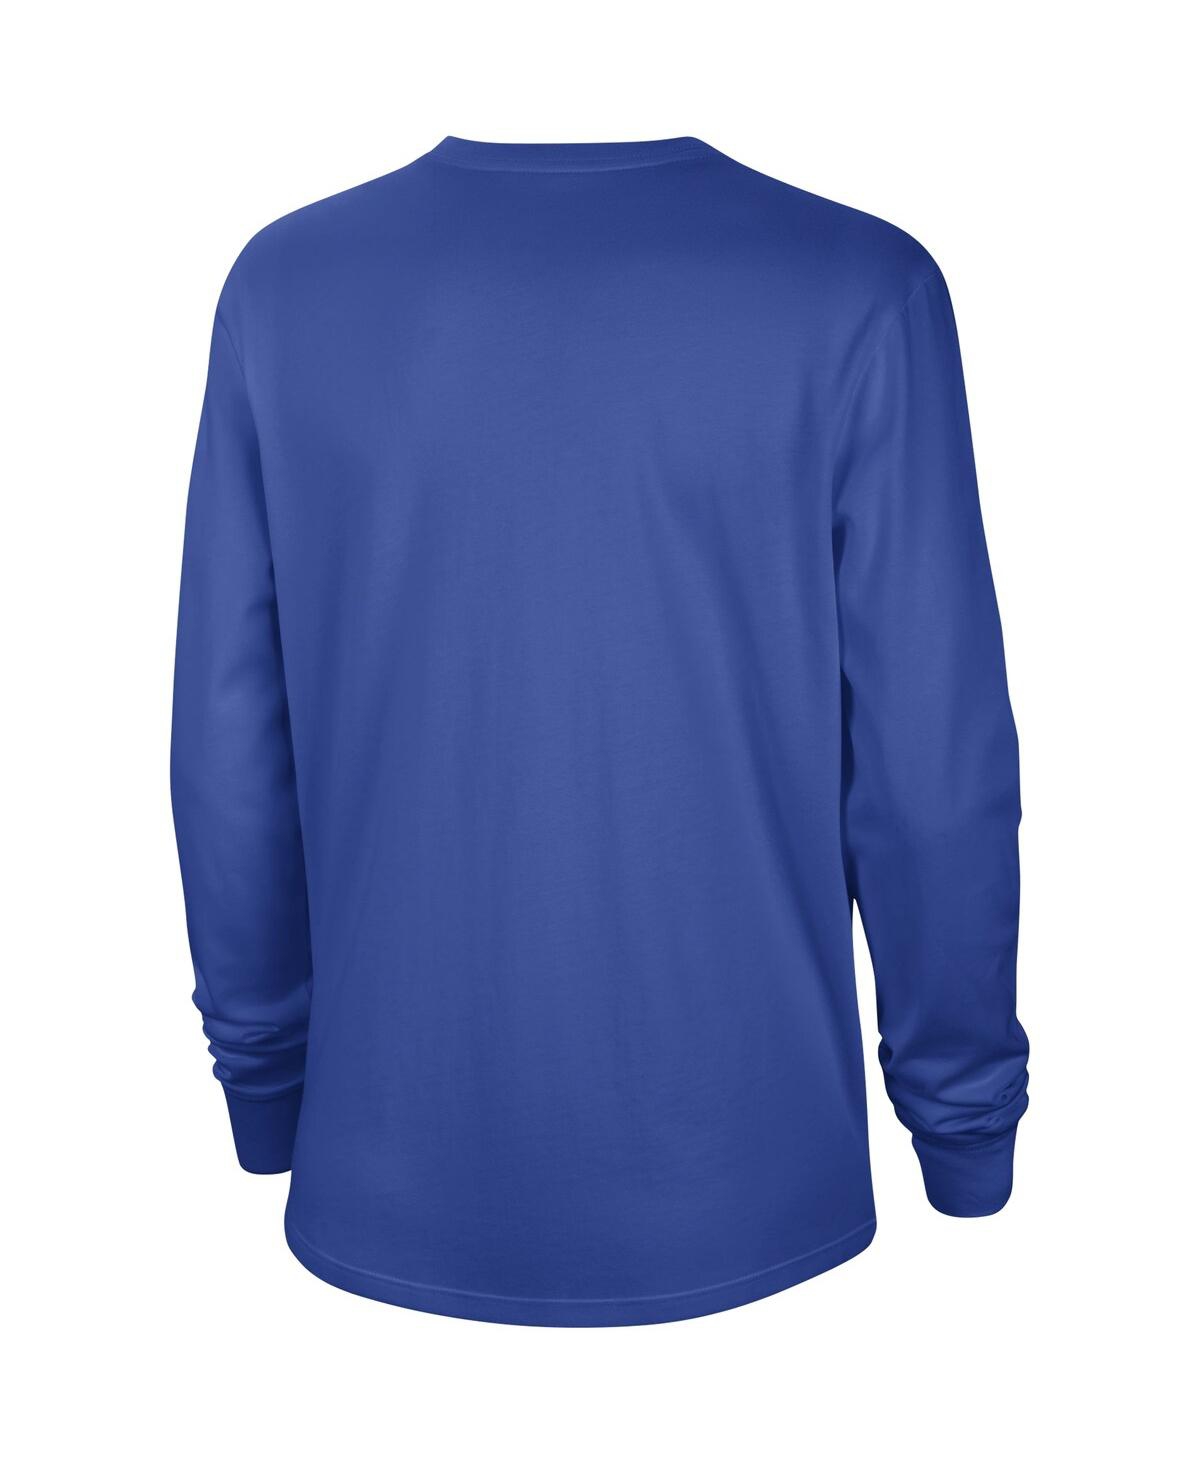 Shop Nike Women's  Royal Distressed Duke Blue Devils Vintage-like Long Sleeve T-shirt